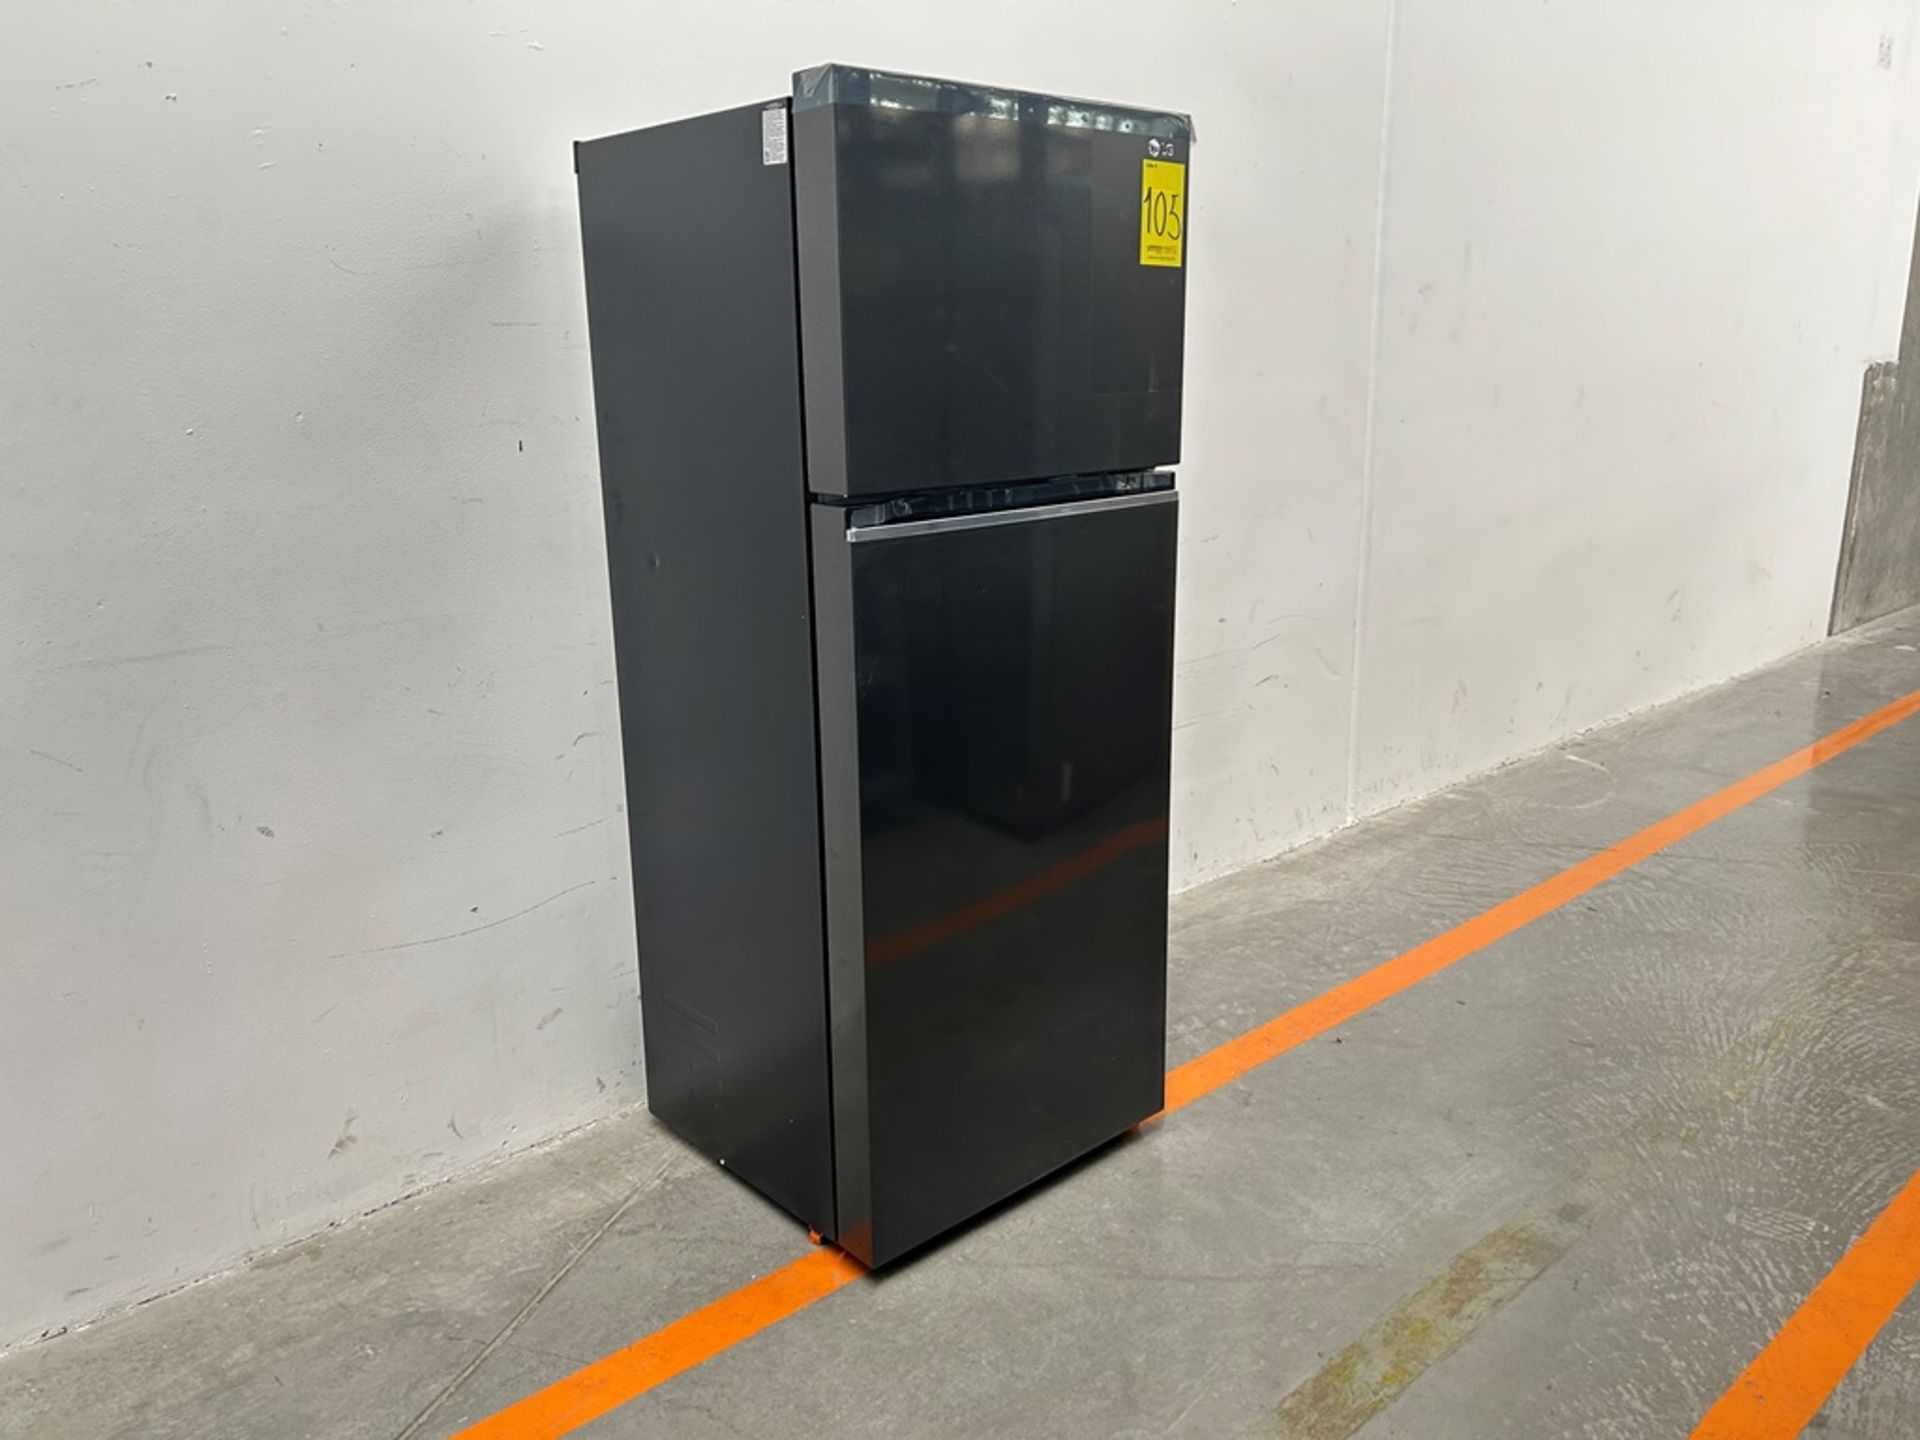 (NUEVO) Refrigerador Marca LG, Modelo VT40BT, Serie 34895, Color NEGRO - Image 3 of 11